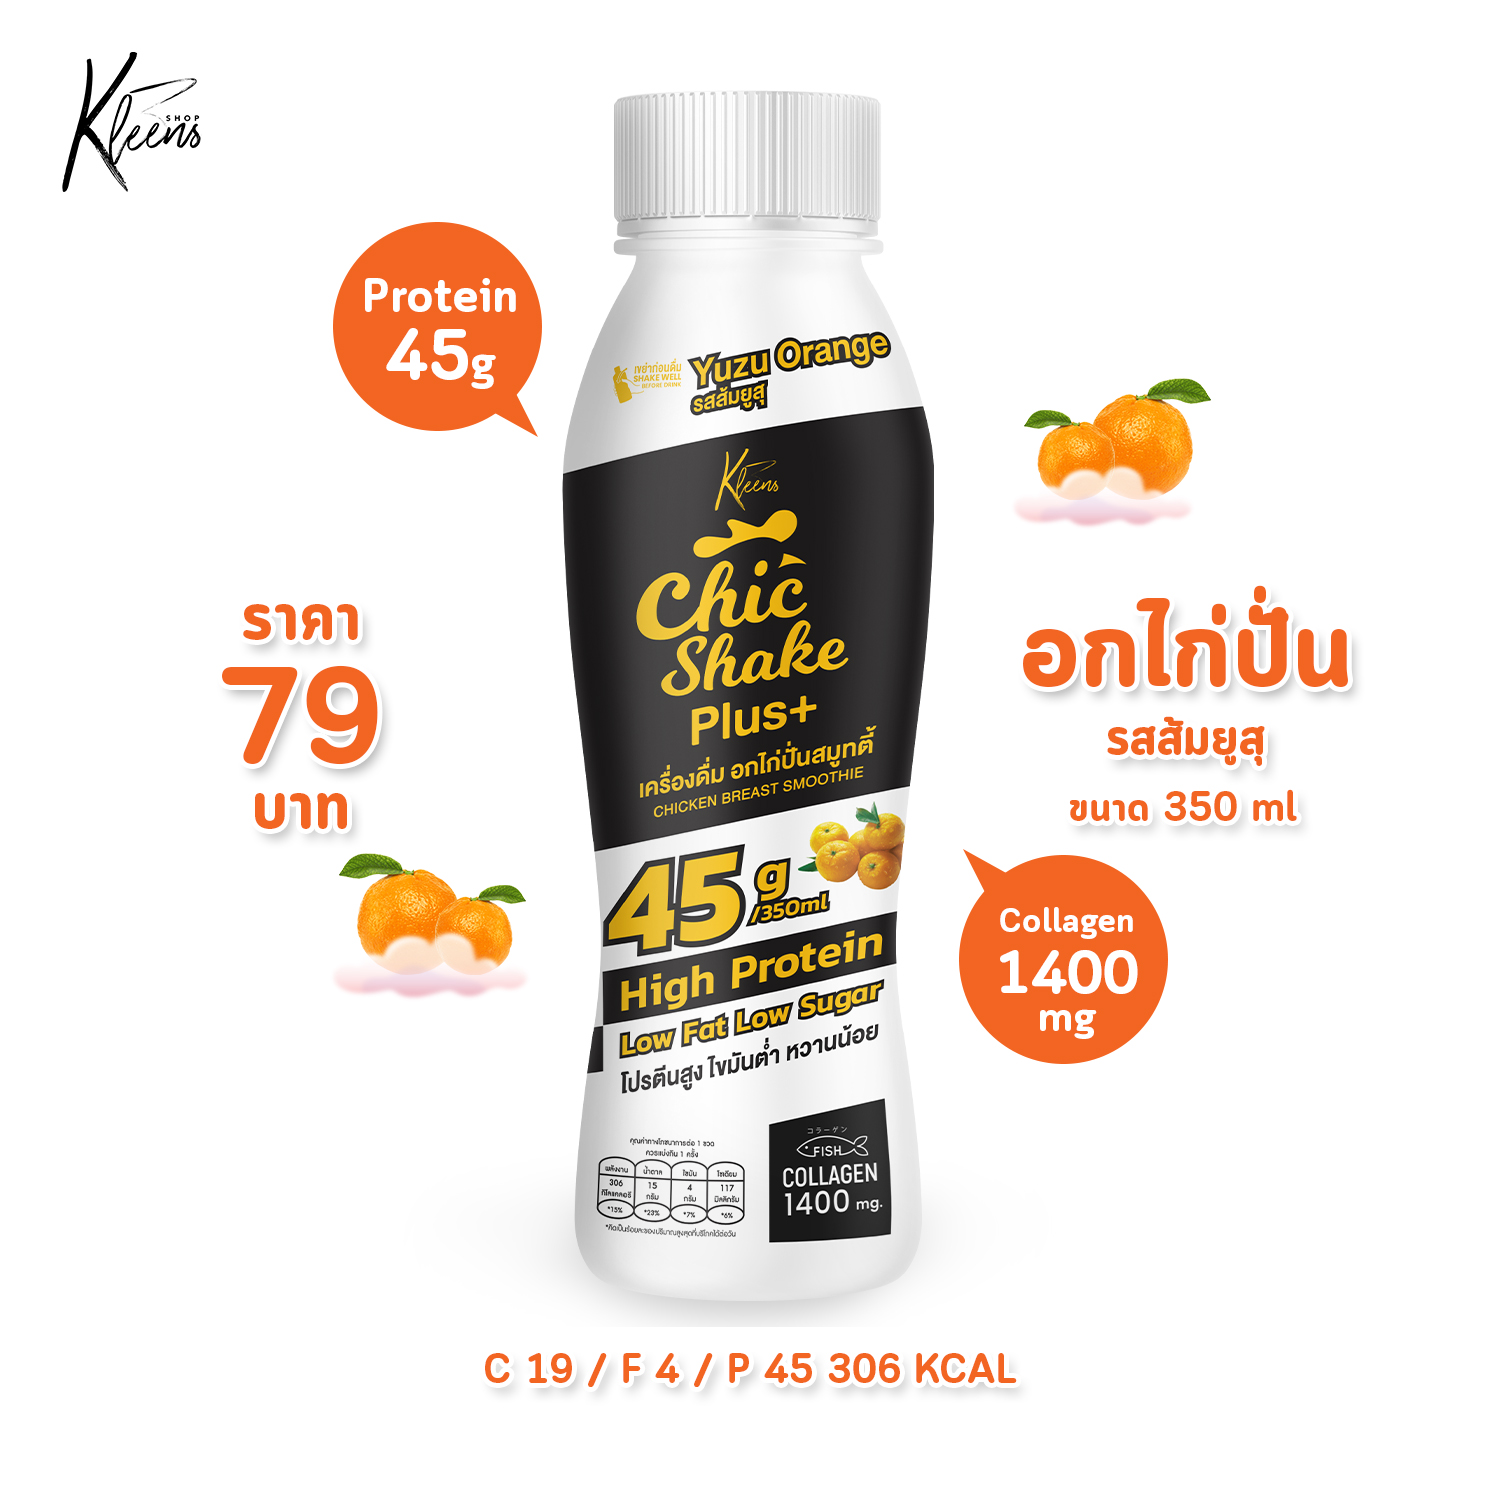 Kleens Chic Shake Plus+ อกไก่ปั่น รสส้มยูสุ 350 ml